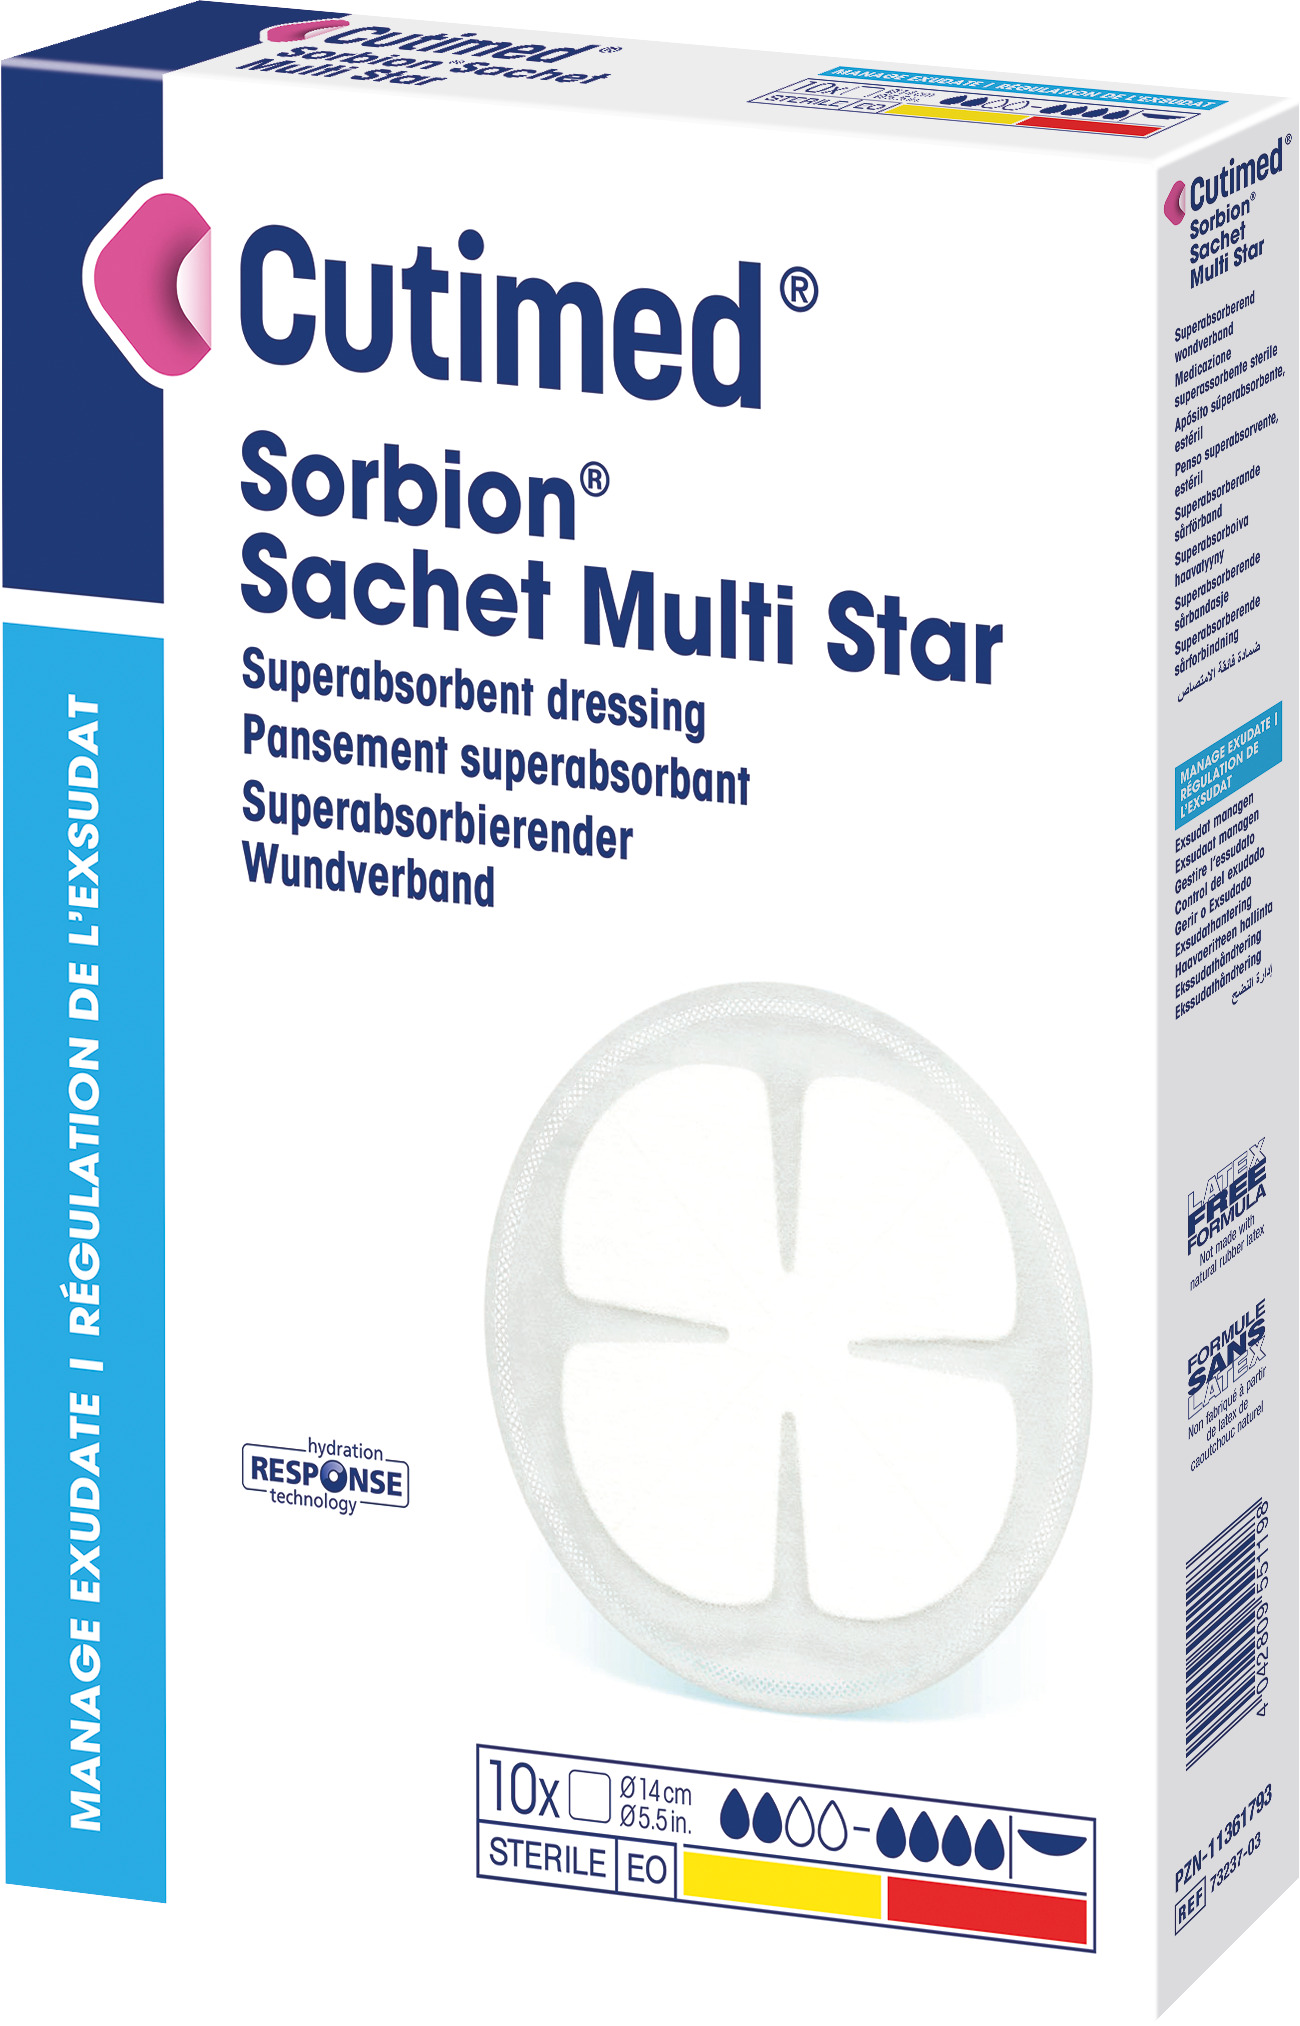 Cutimed Sorbion Sachet Multi Star